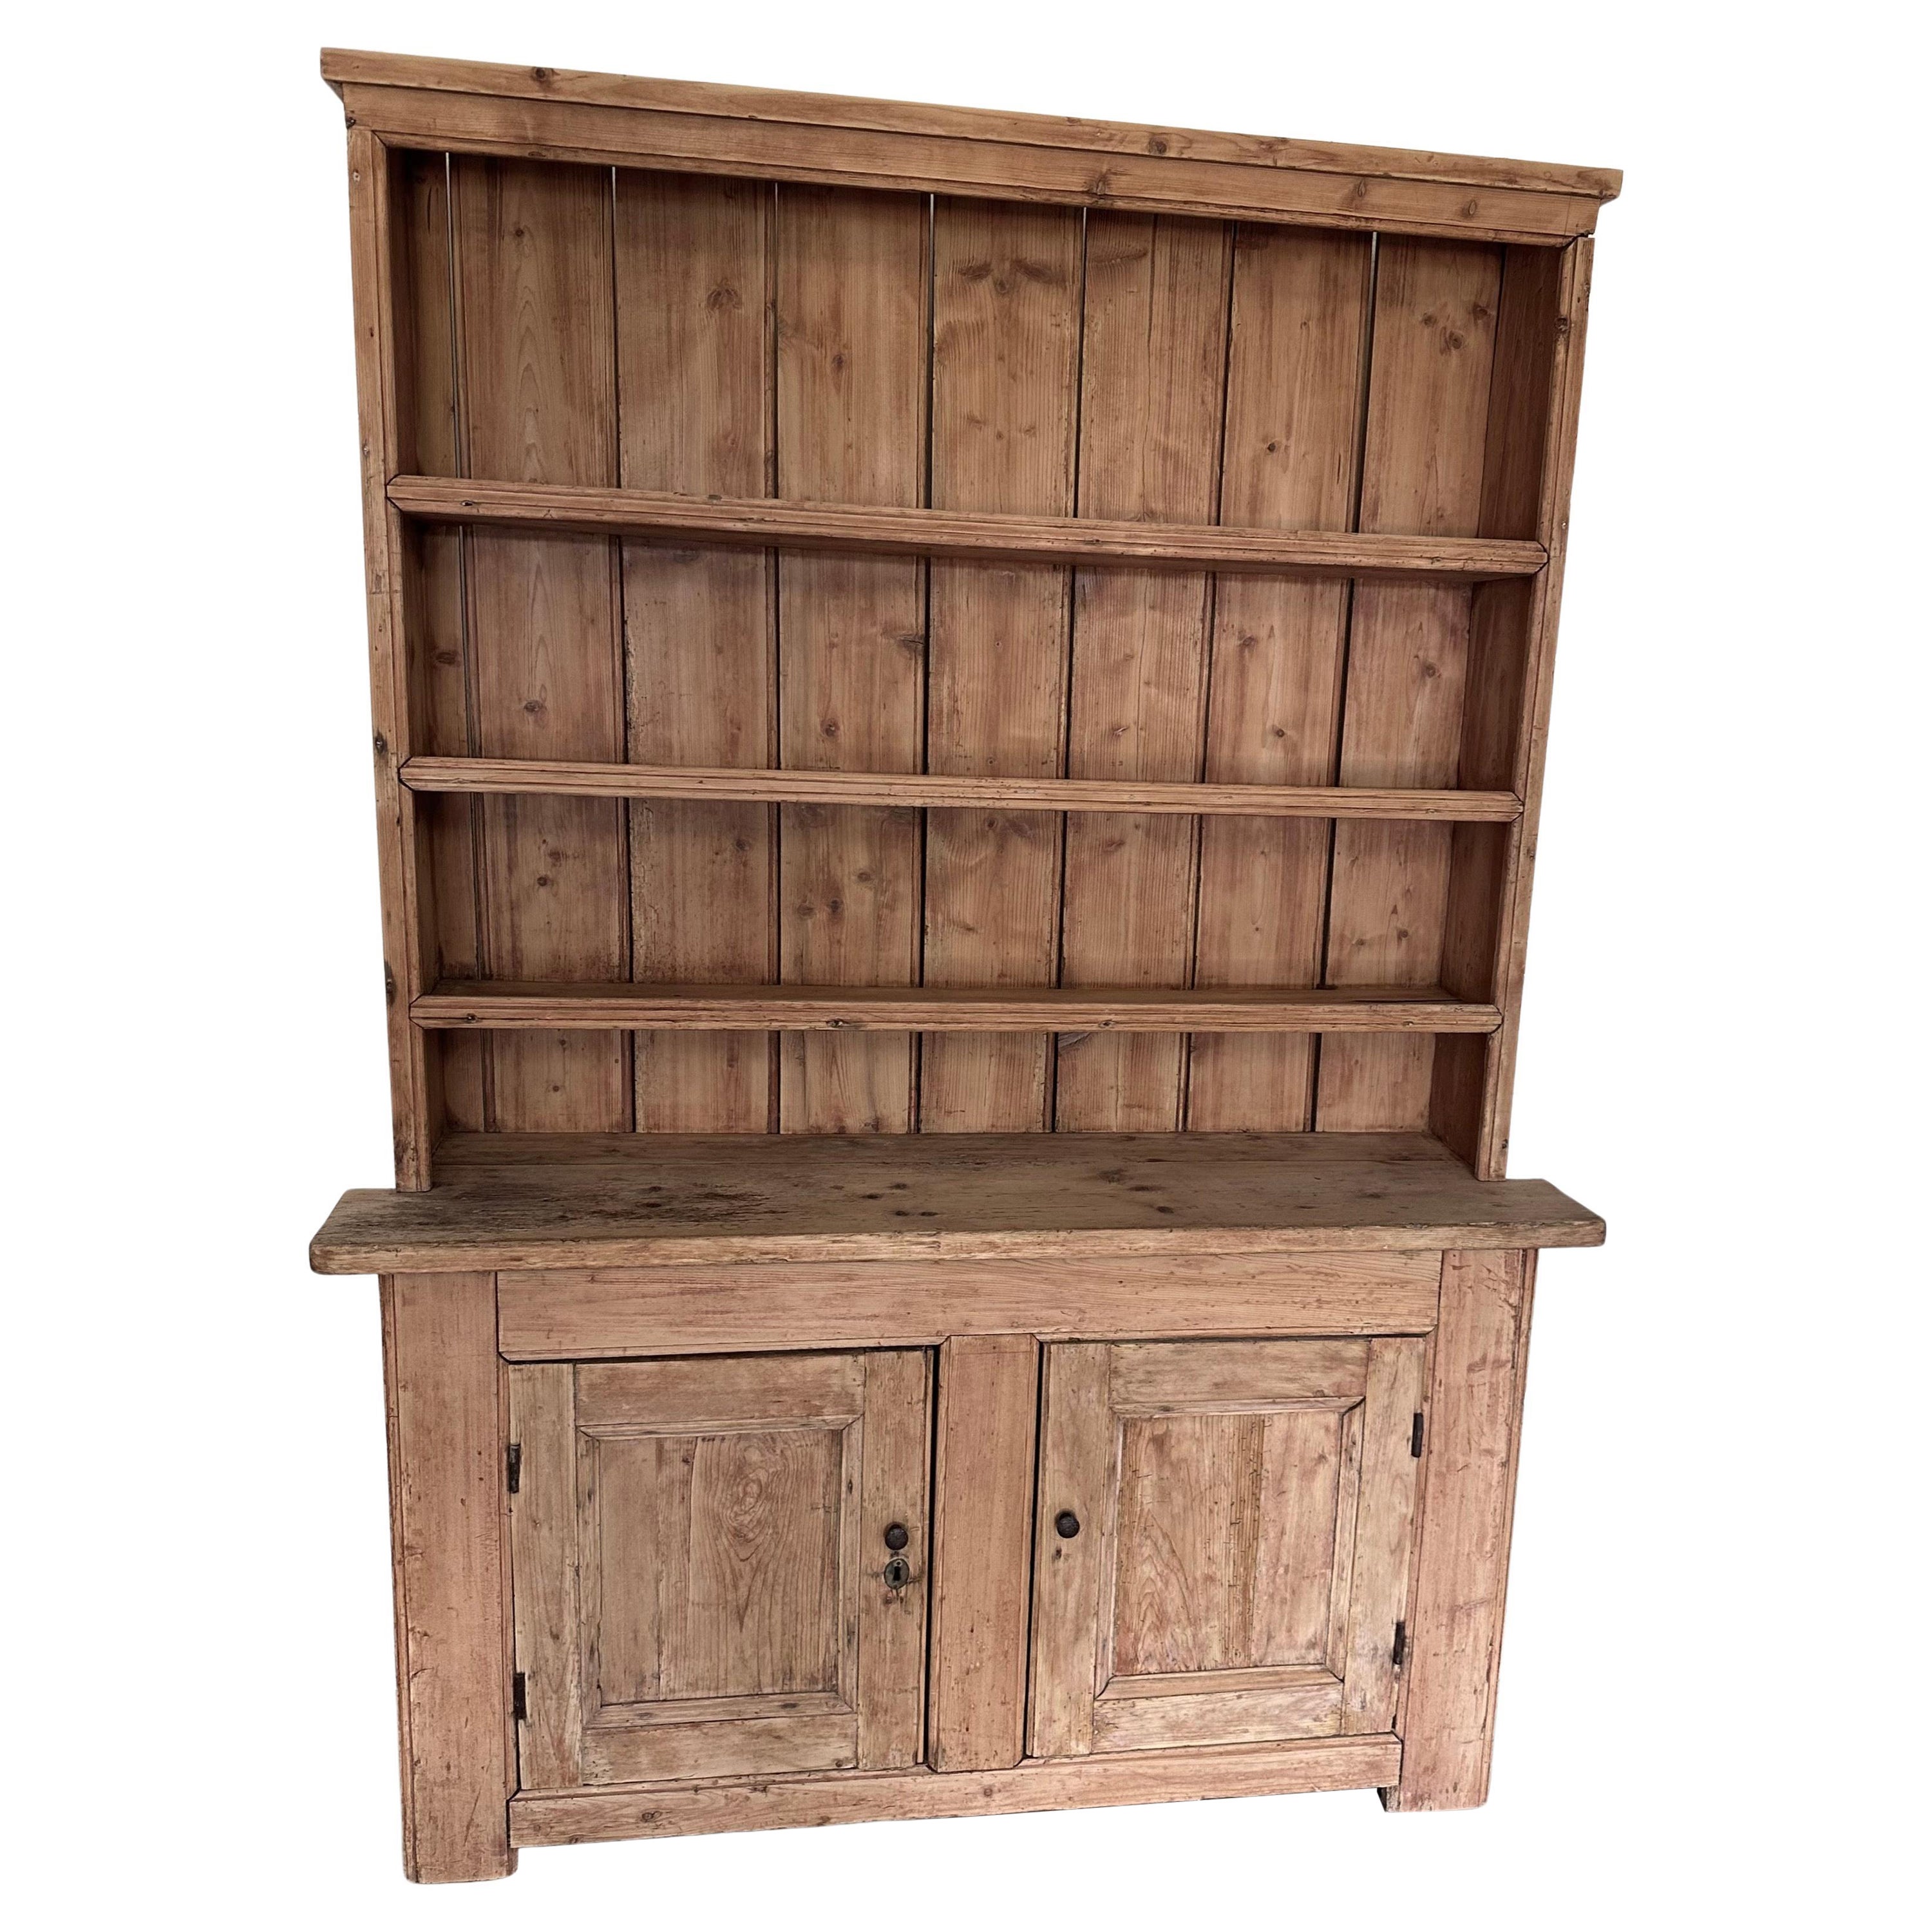 19th Century English Pine Dresser